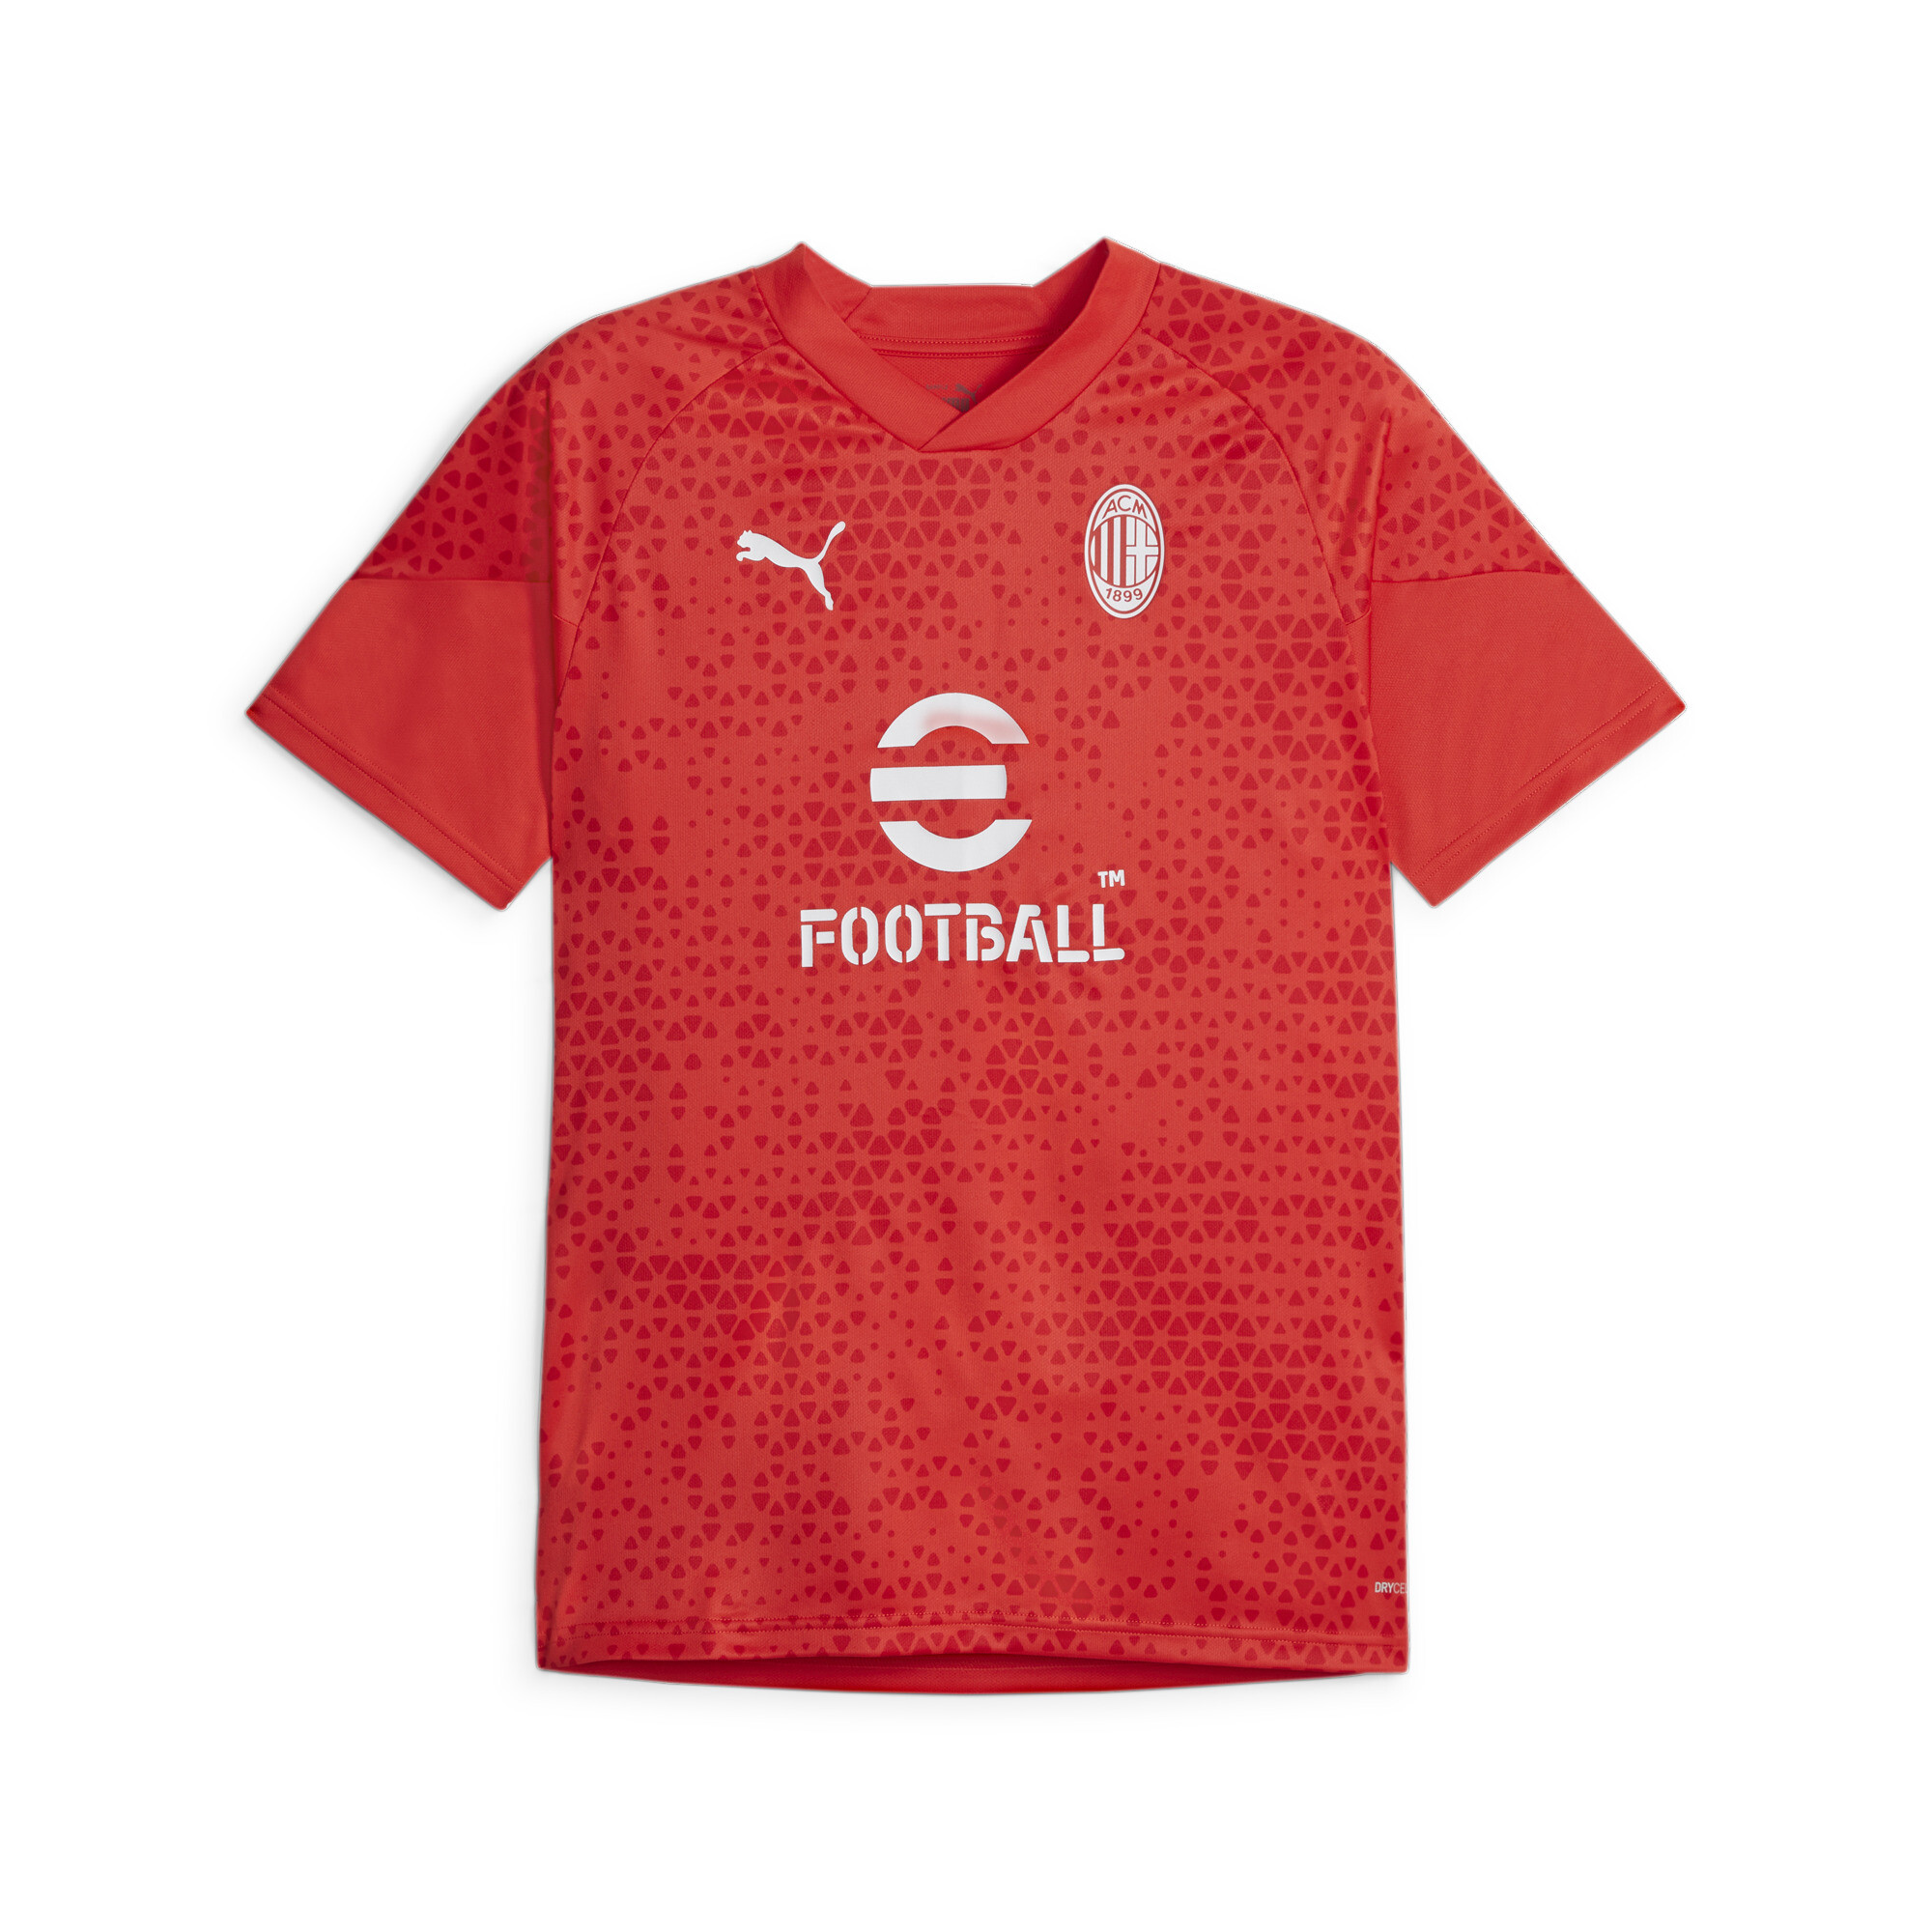 Men's PUMA AC Milan Football Training Jersey In Red, Size 2XL